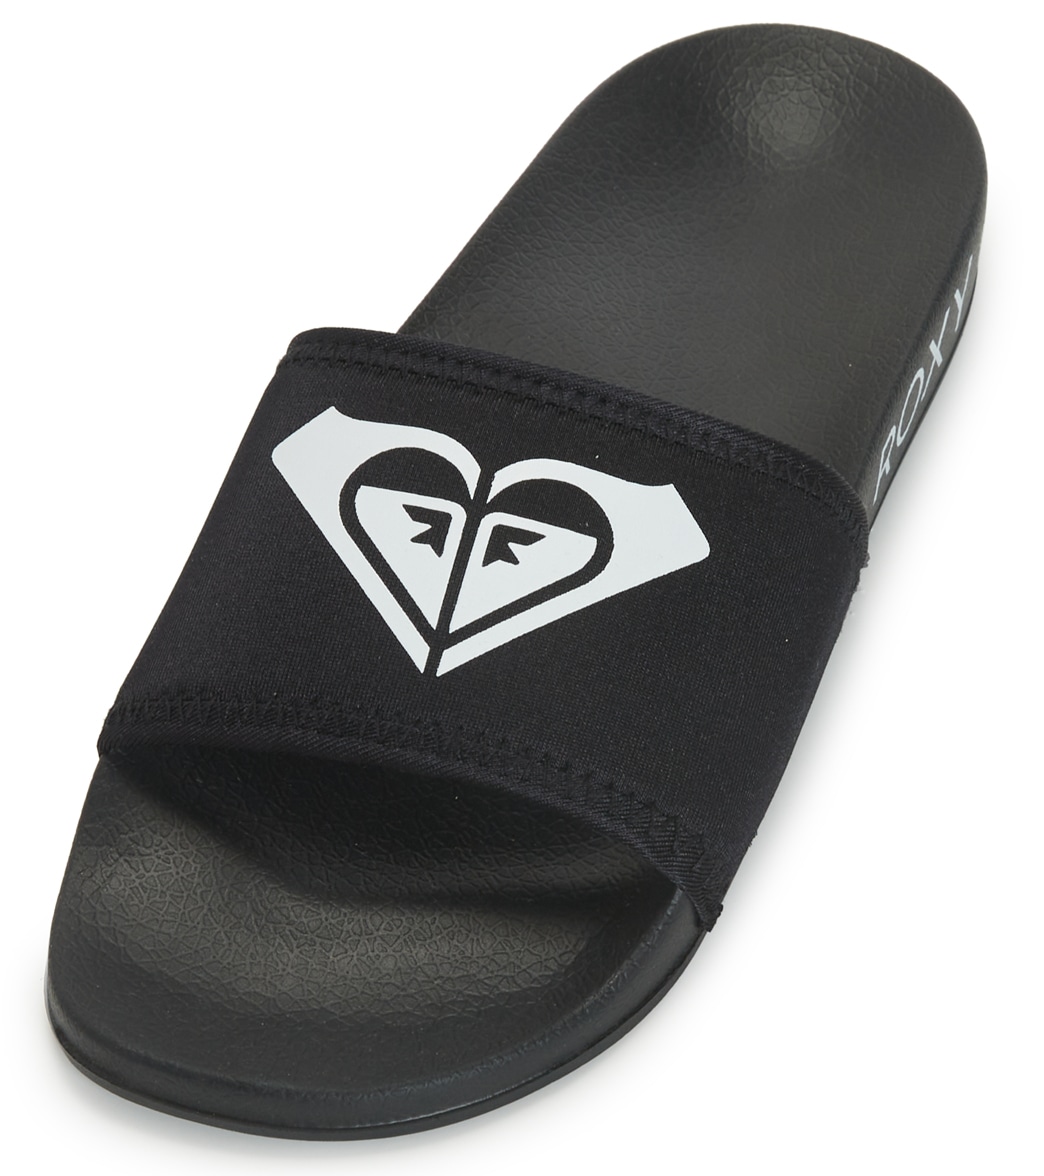 Roxy Women's Slippery Neo Slides Sandals - Black 10 - Swimoutlet.com